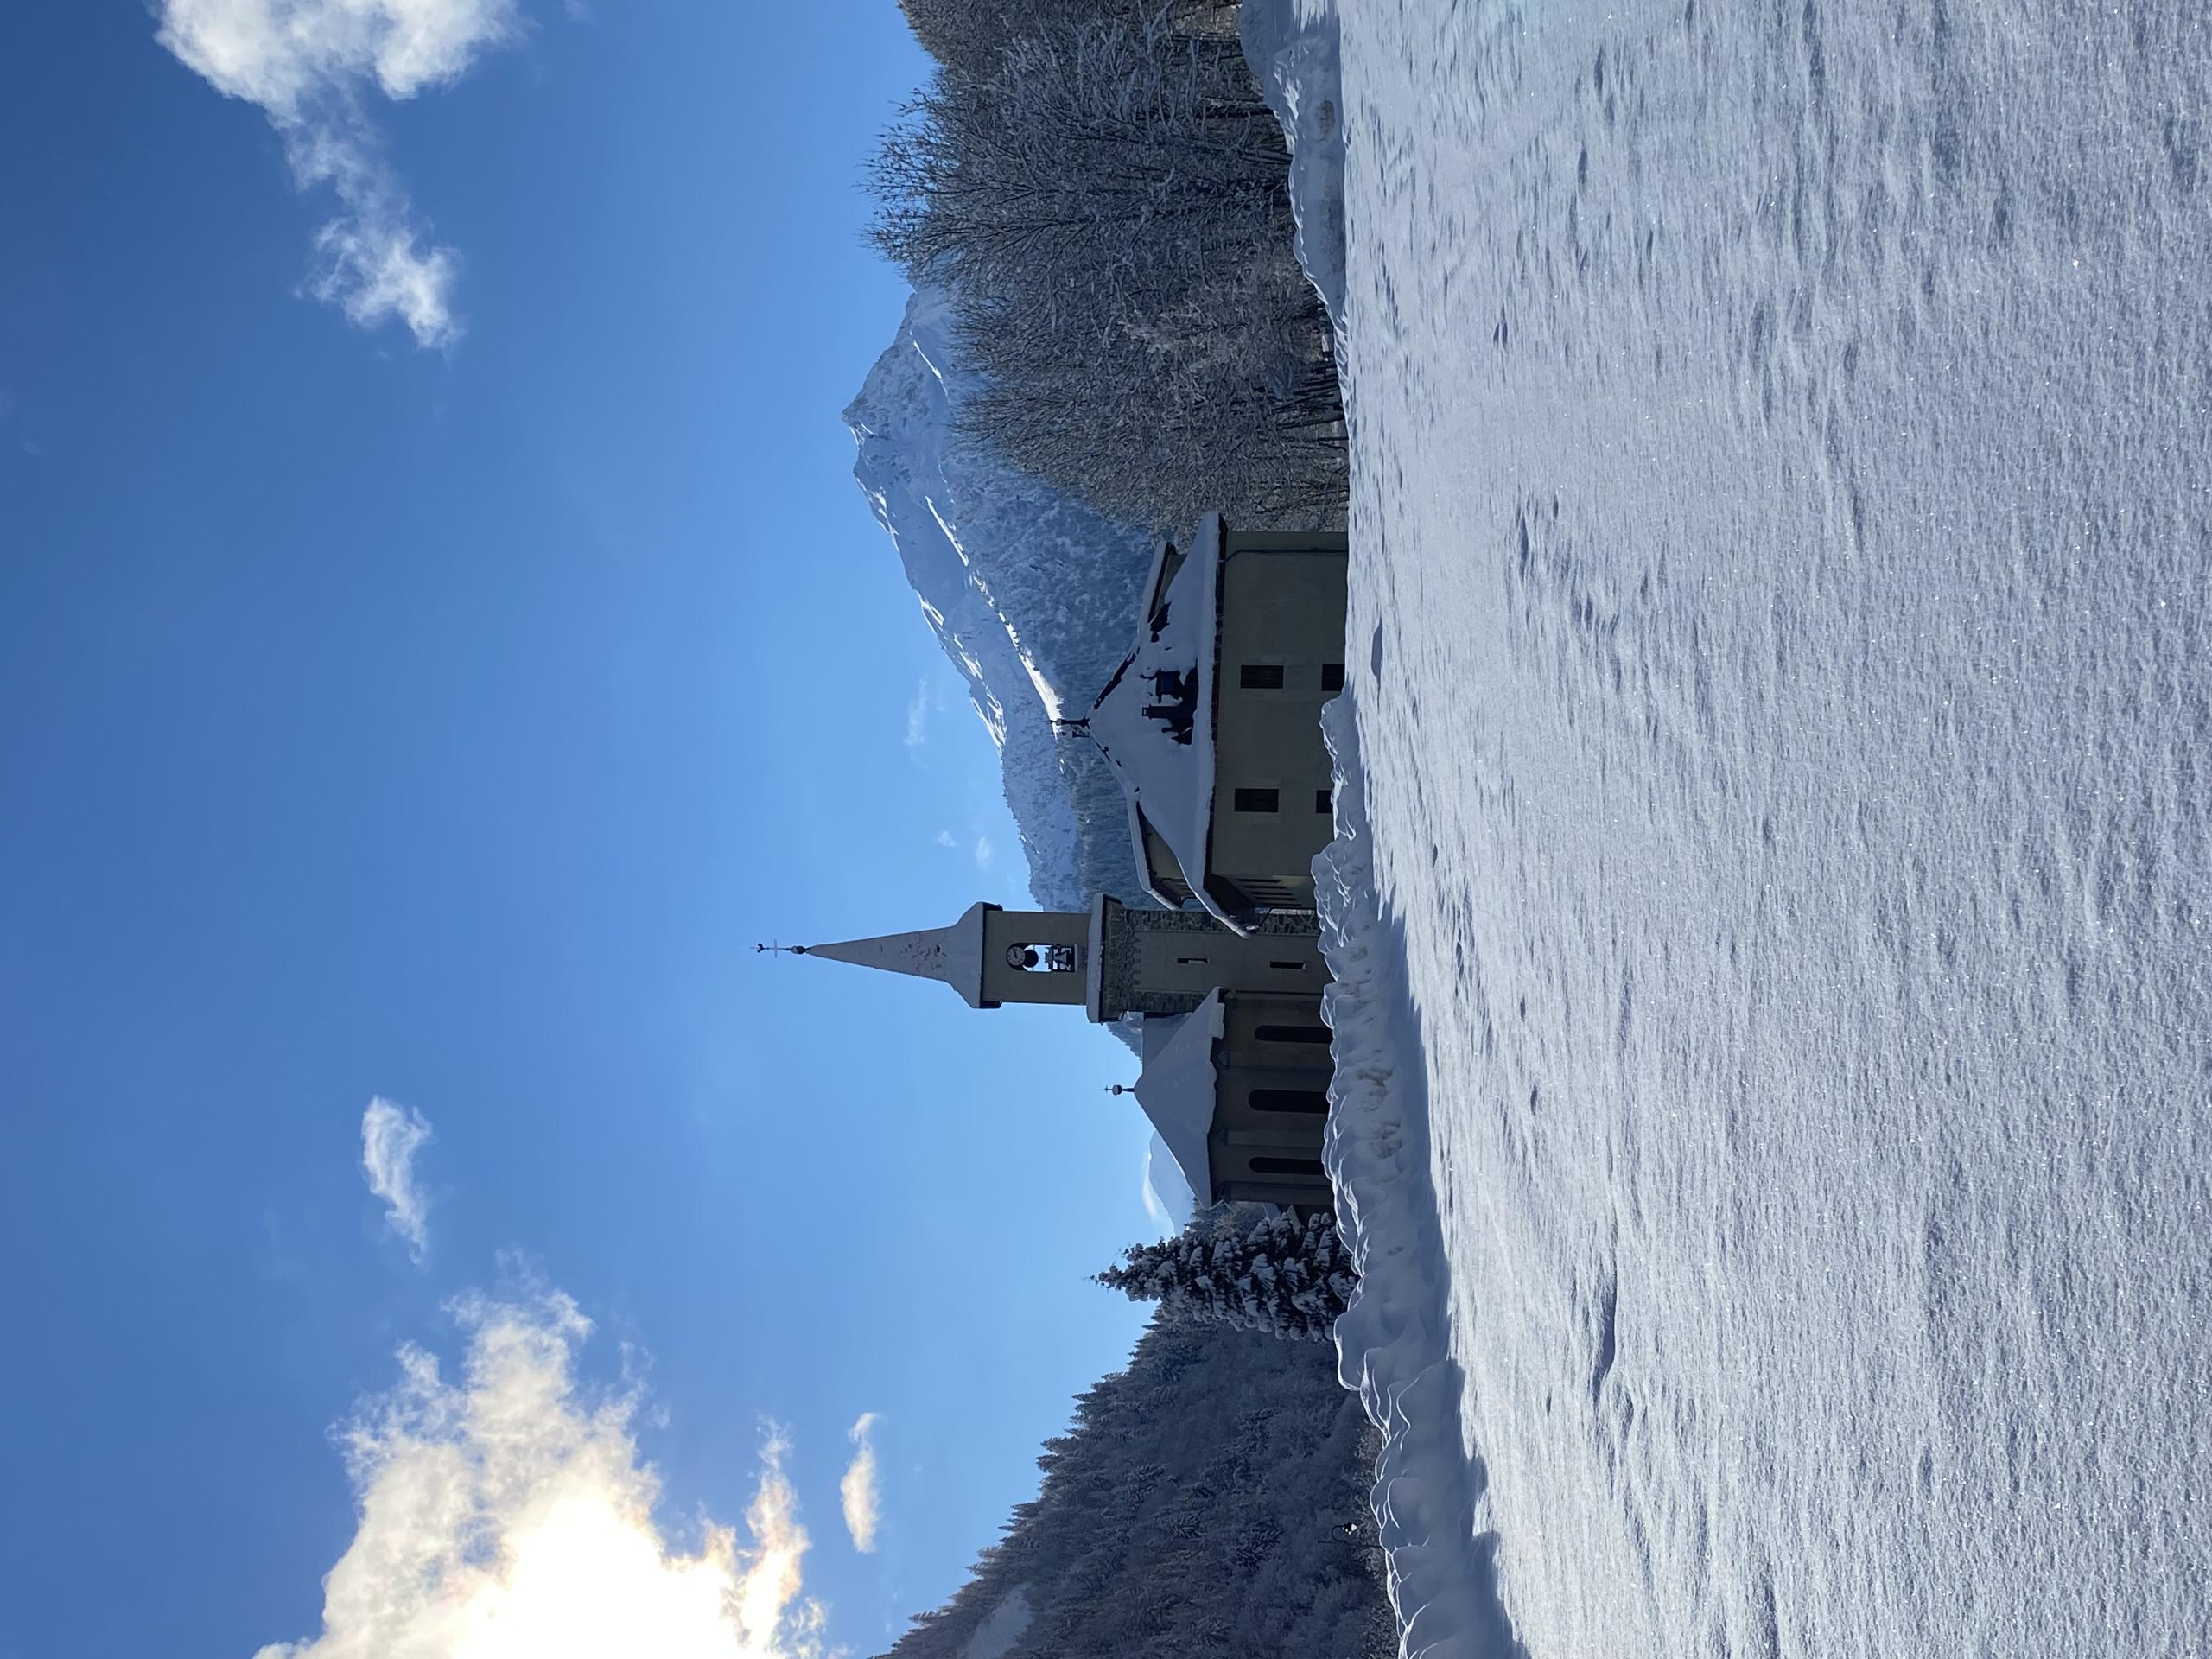 ski resort Saint Colomban des Villards